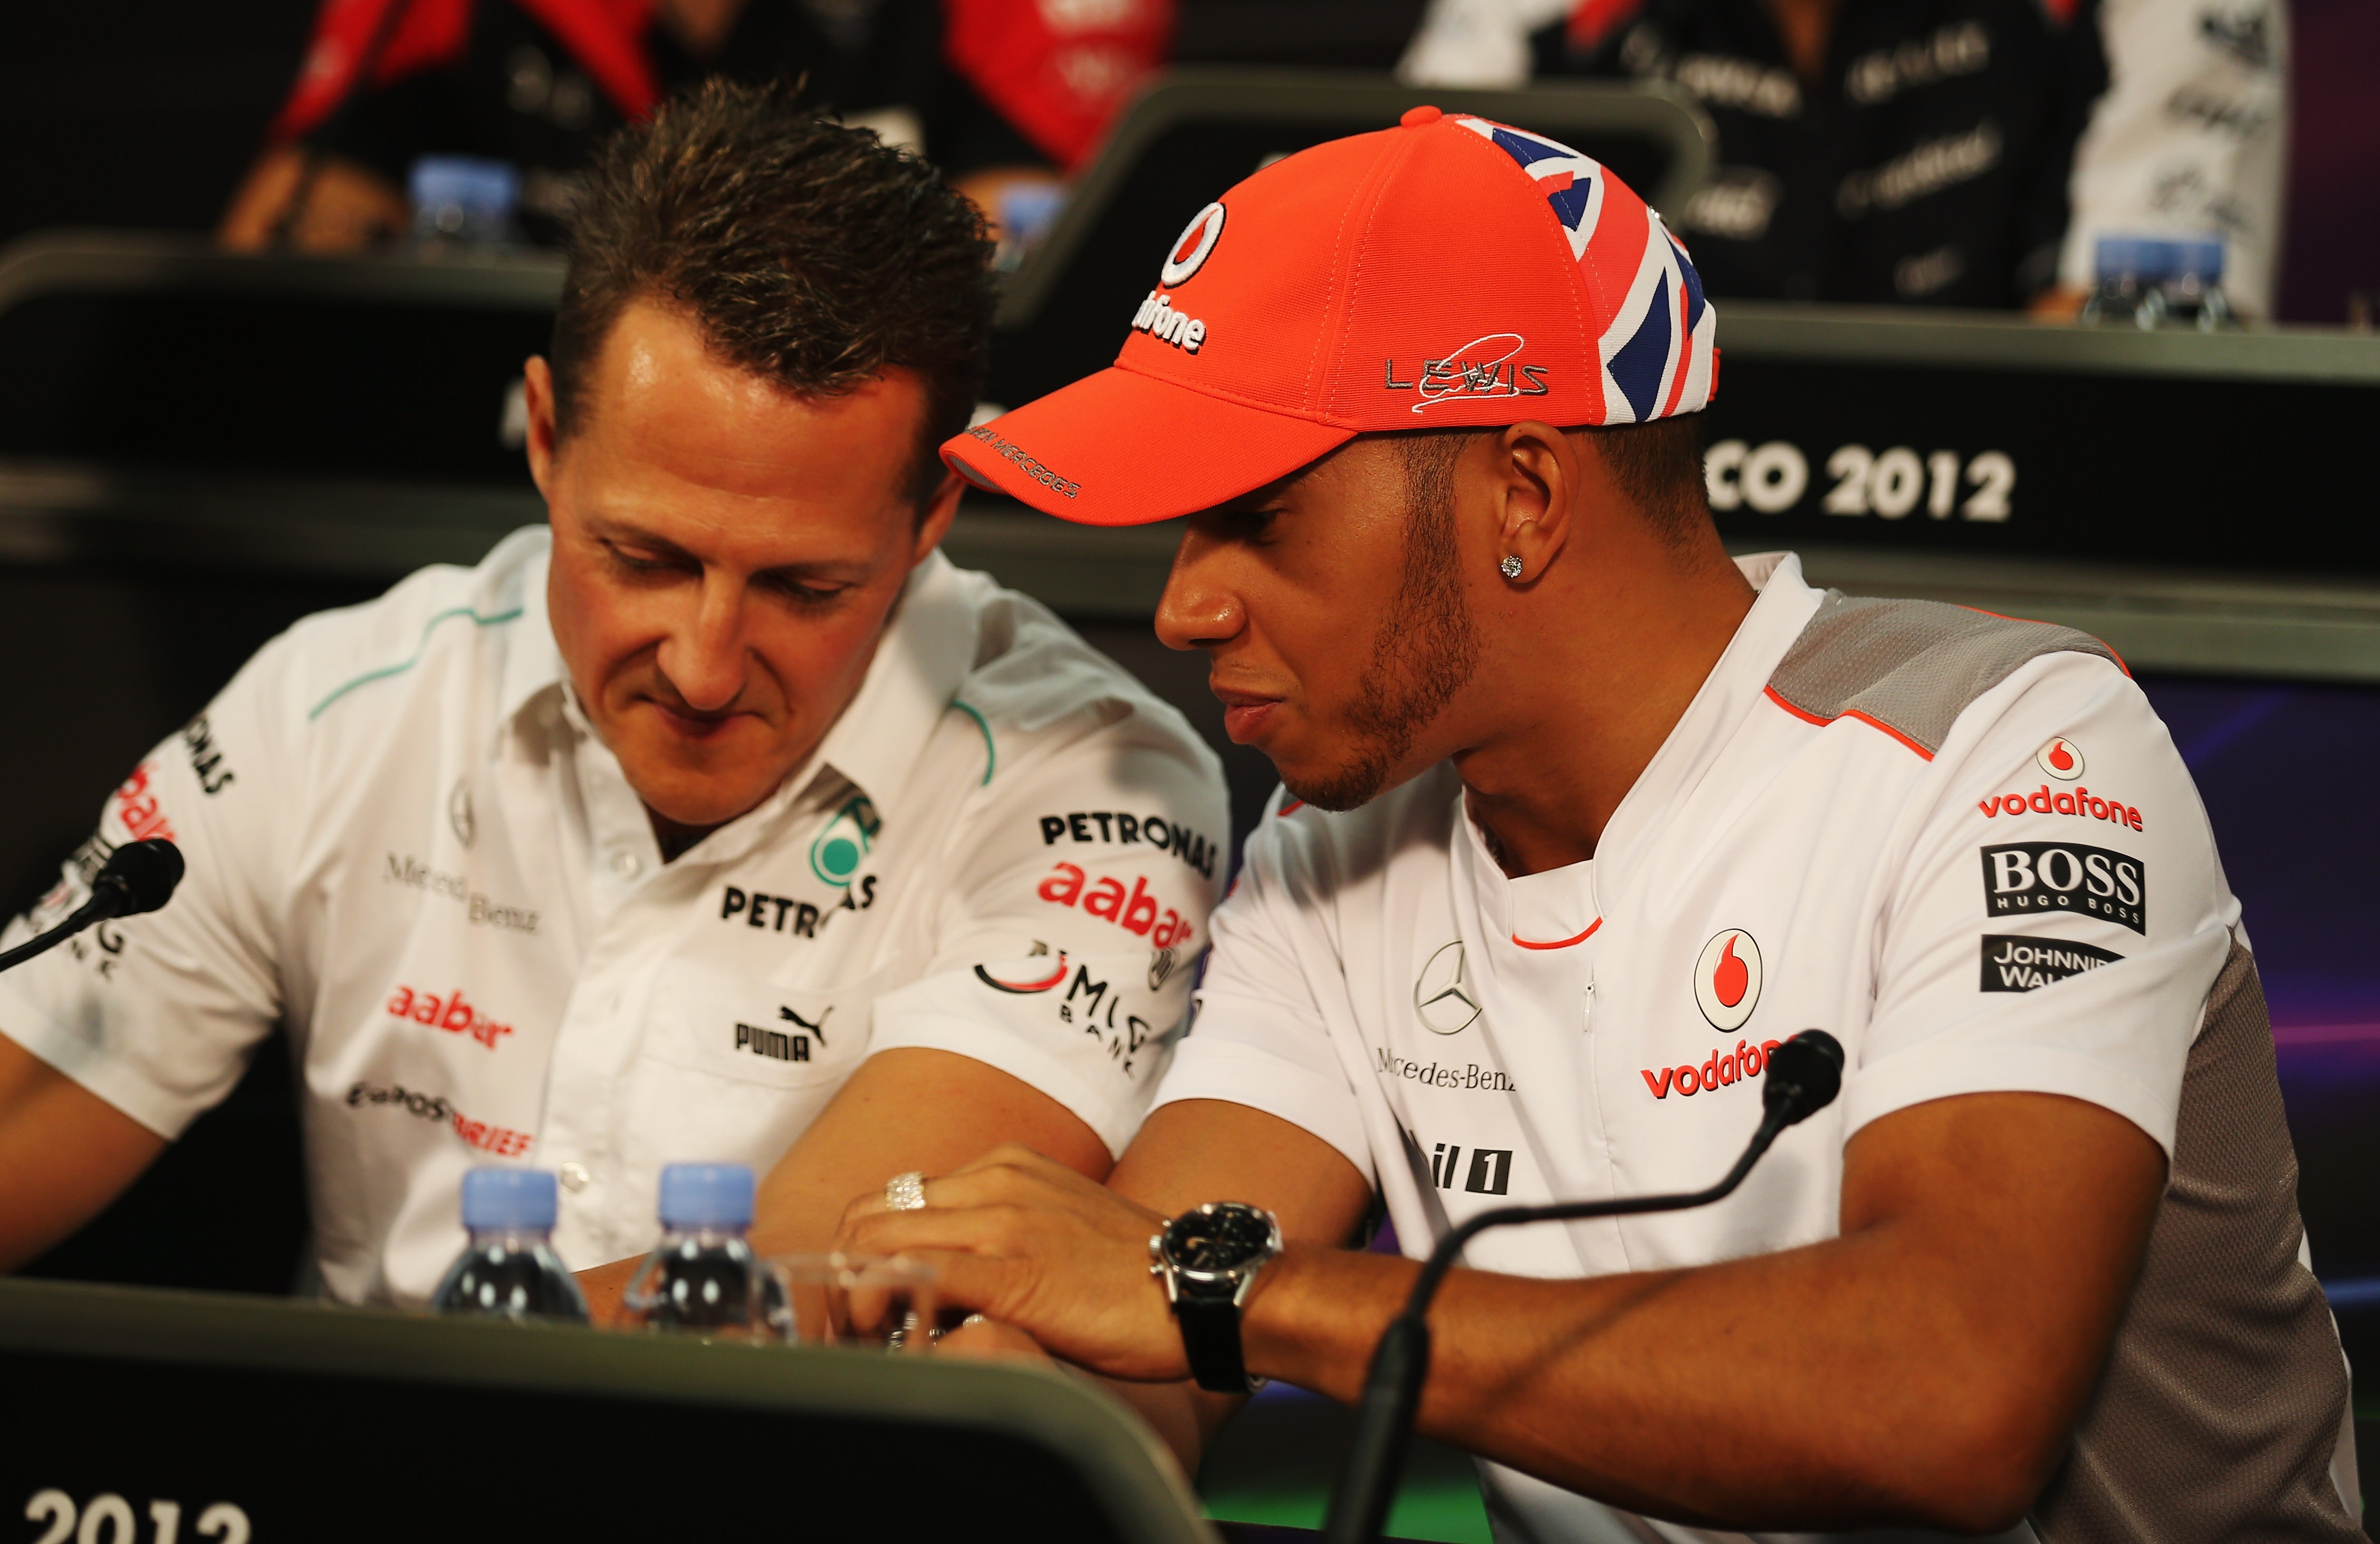 Lewis Hamilton vs. Michael Schumacher: Who’s the Better F1 Driver?